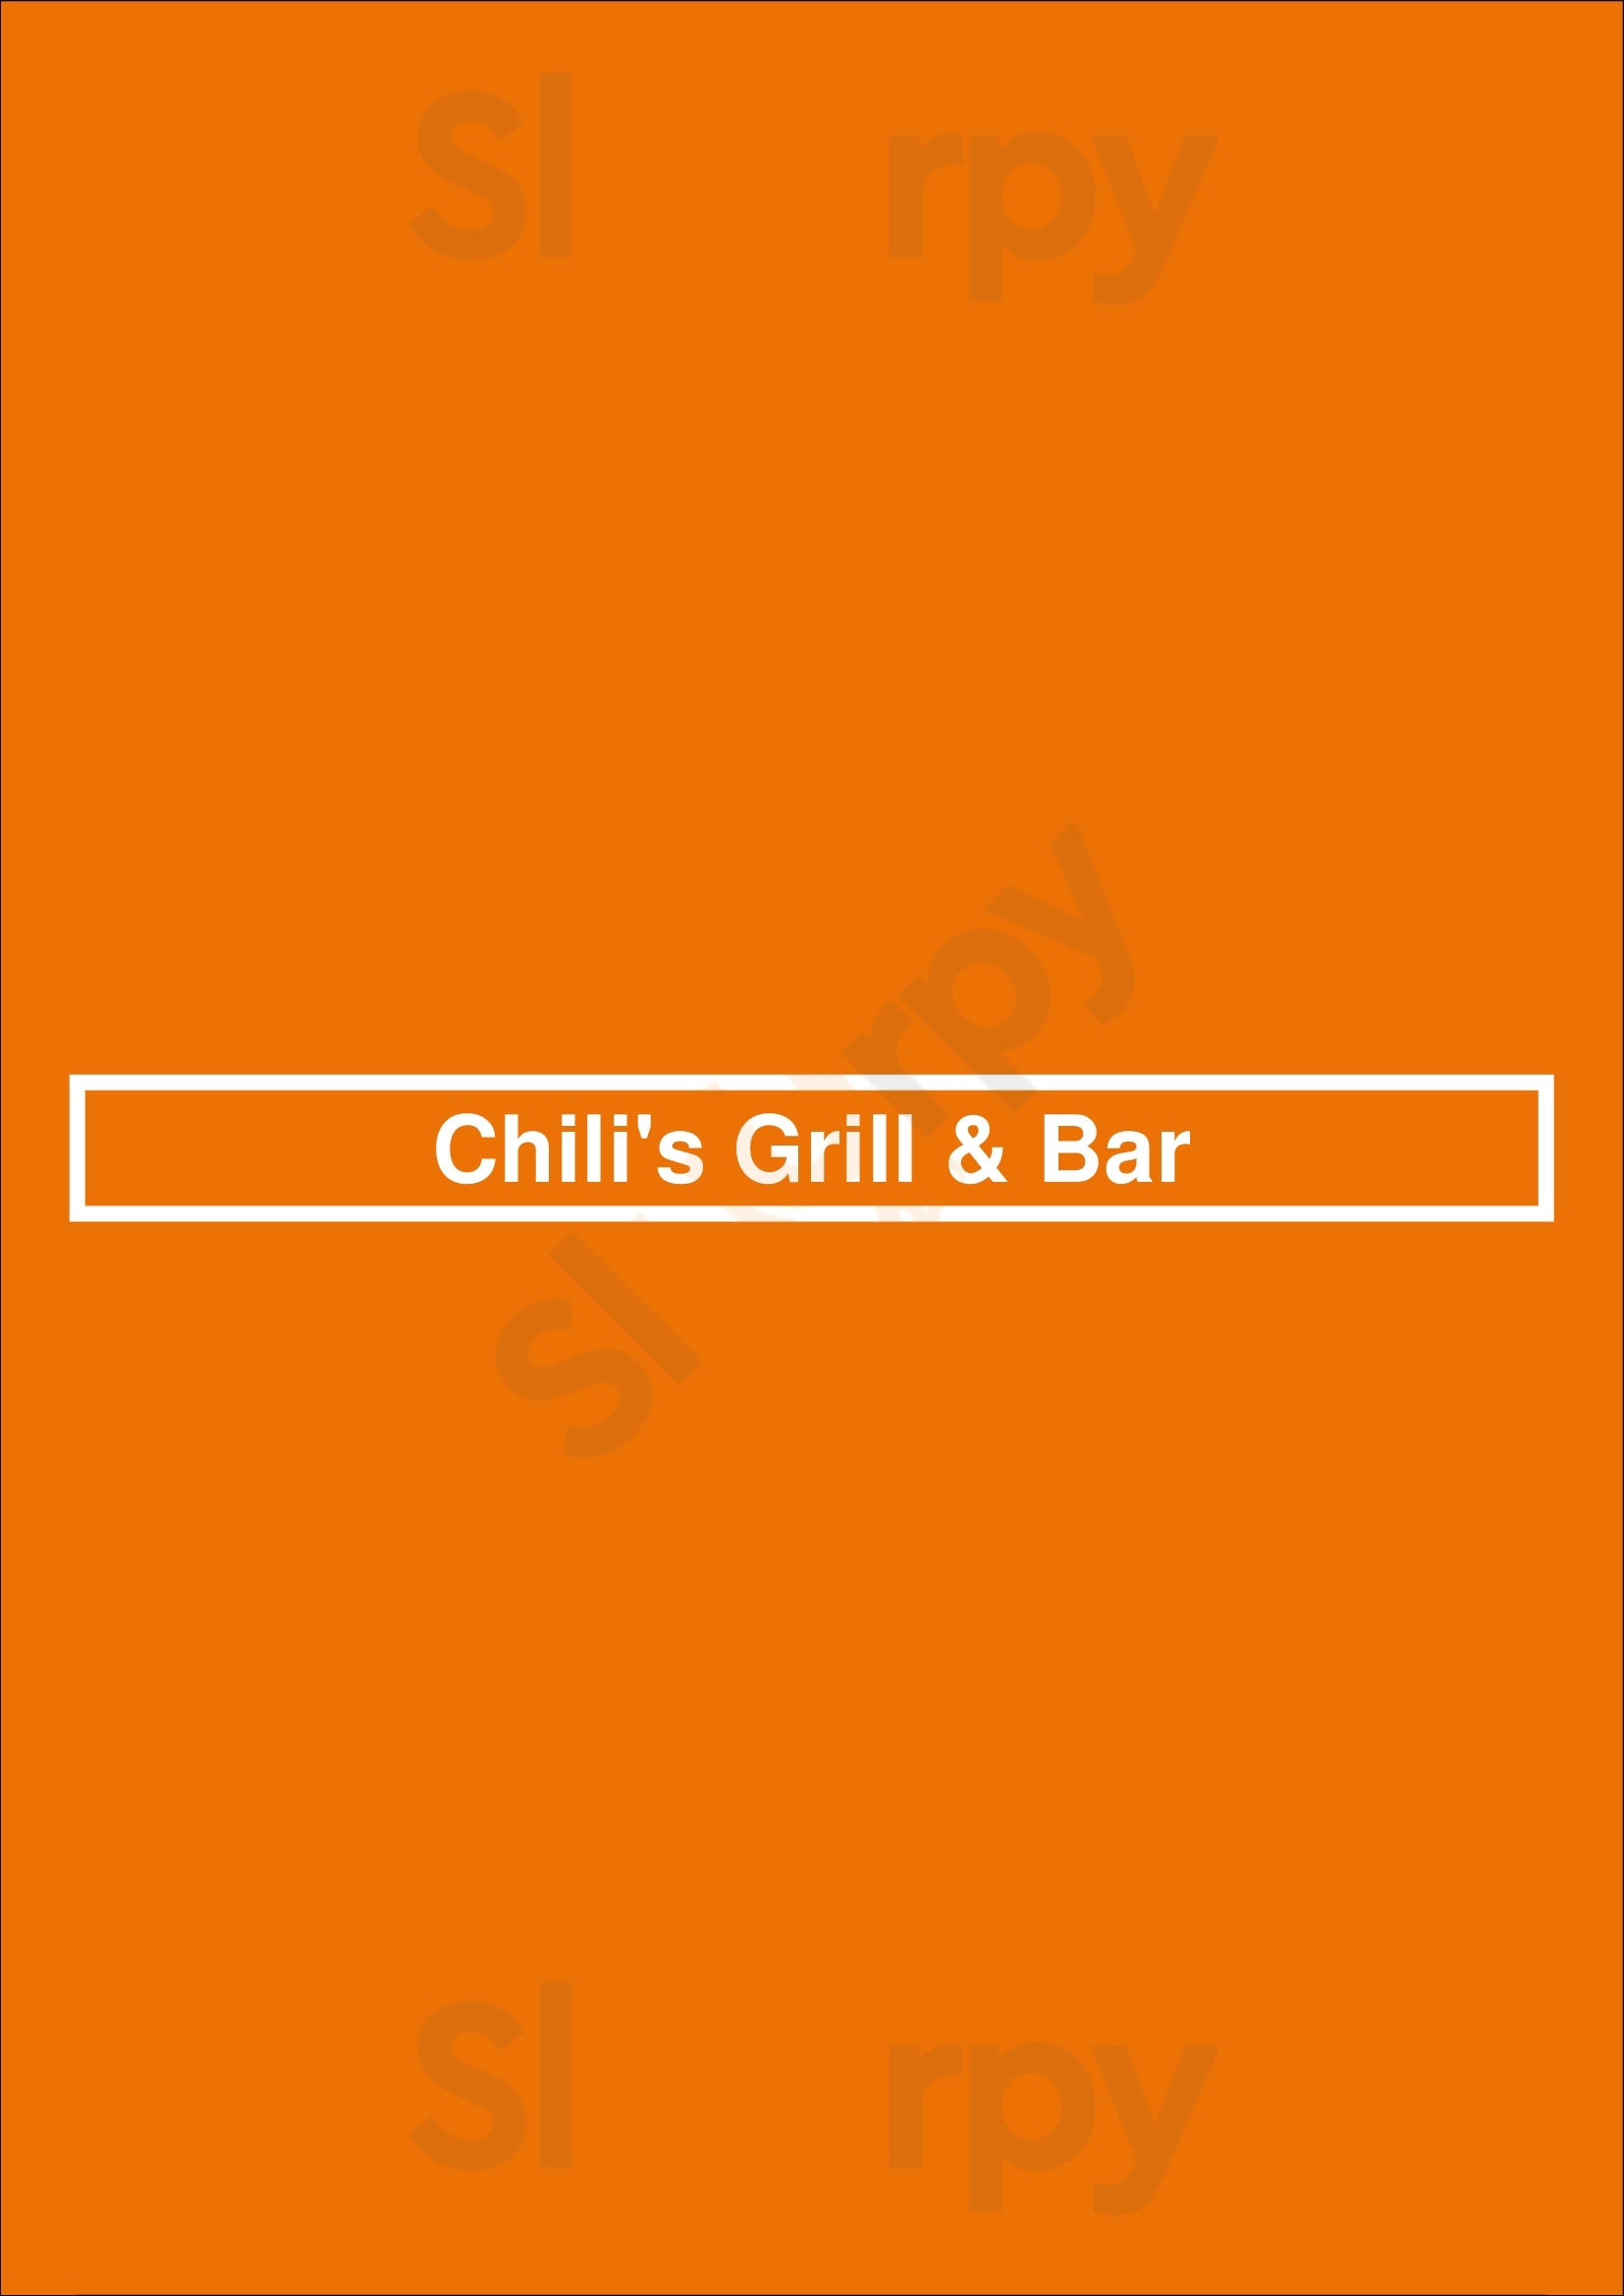 Chili's Grill & Bar Houston Menu - 1